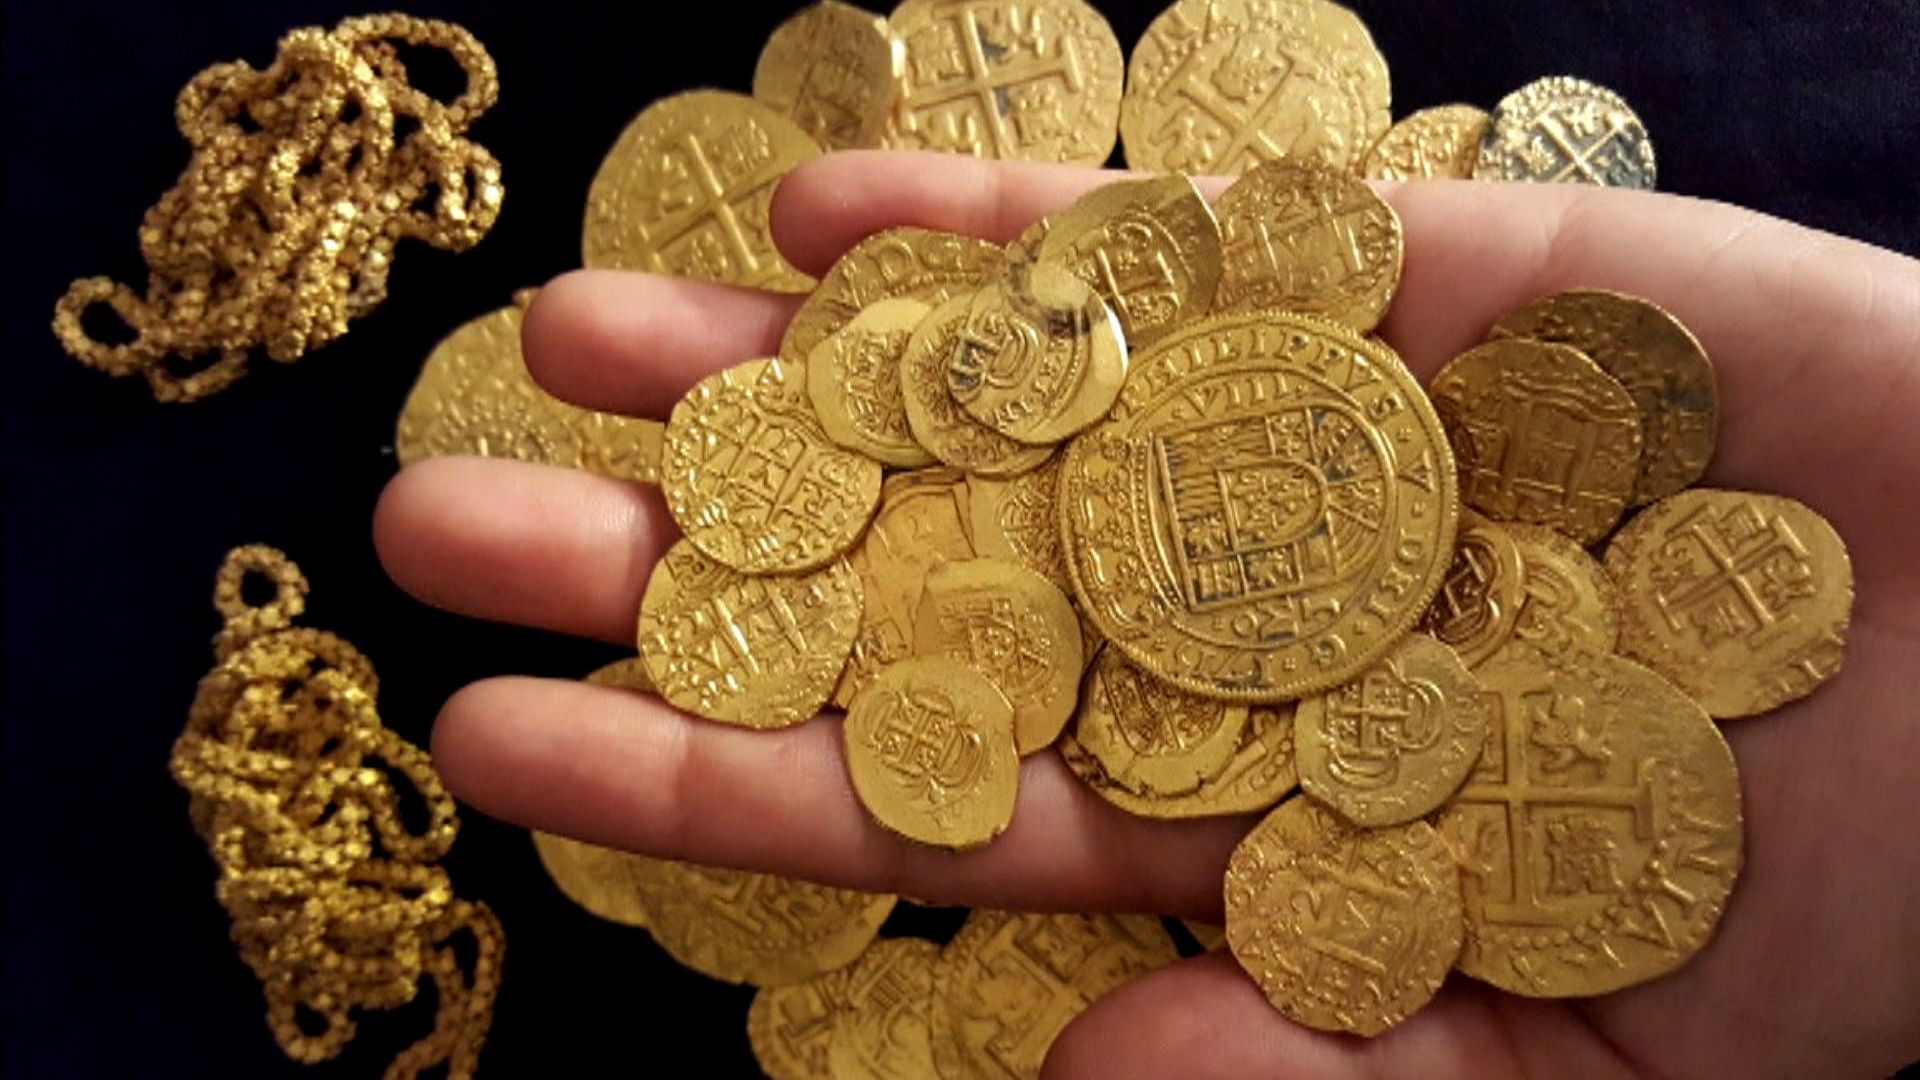 Сокровищ британии. Монеты золото 17век Голландии. Золотые монеты 17 века. Золотые монеты Европы 17 века. Золотые монеты Испании 17 века.